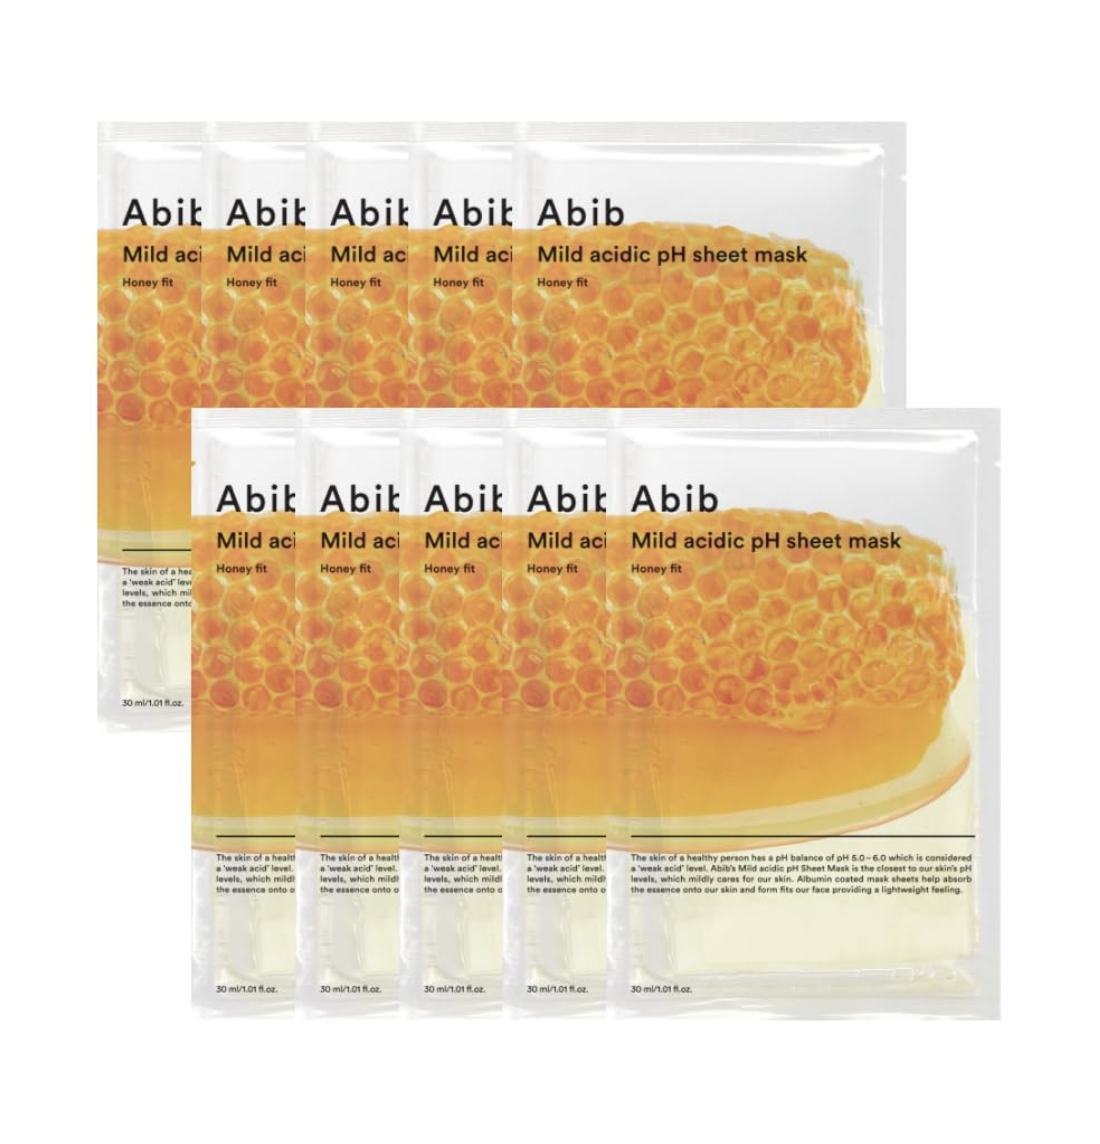 Abib Mild Acidic pH Sheet Mask Honey Fit - 1 Pack of 10 Sheets